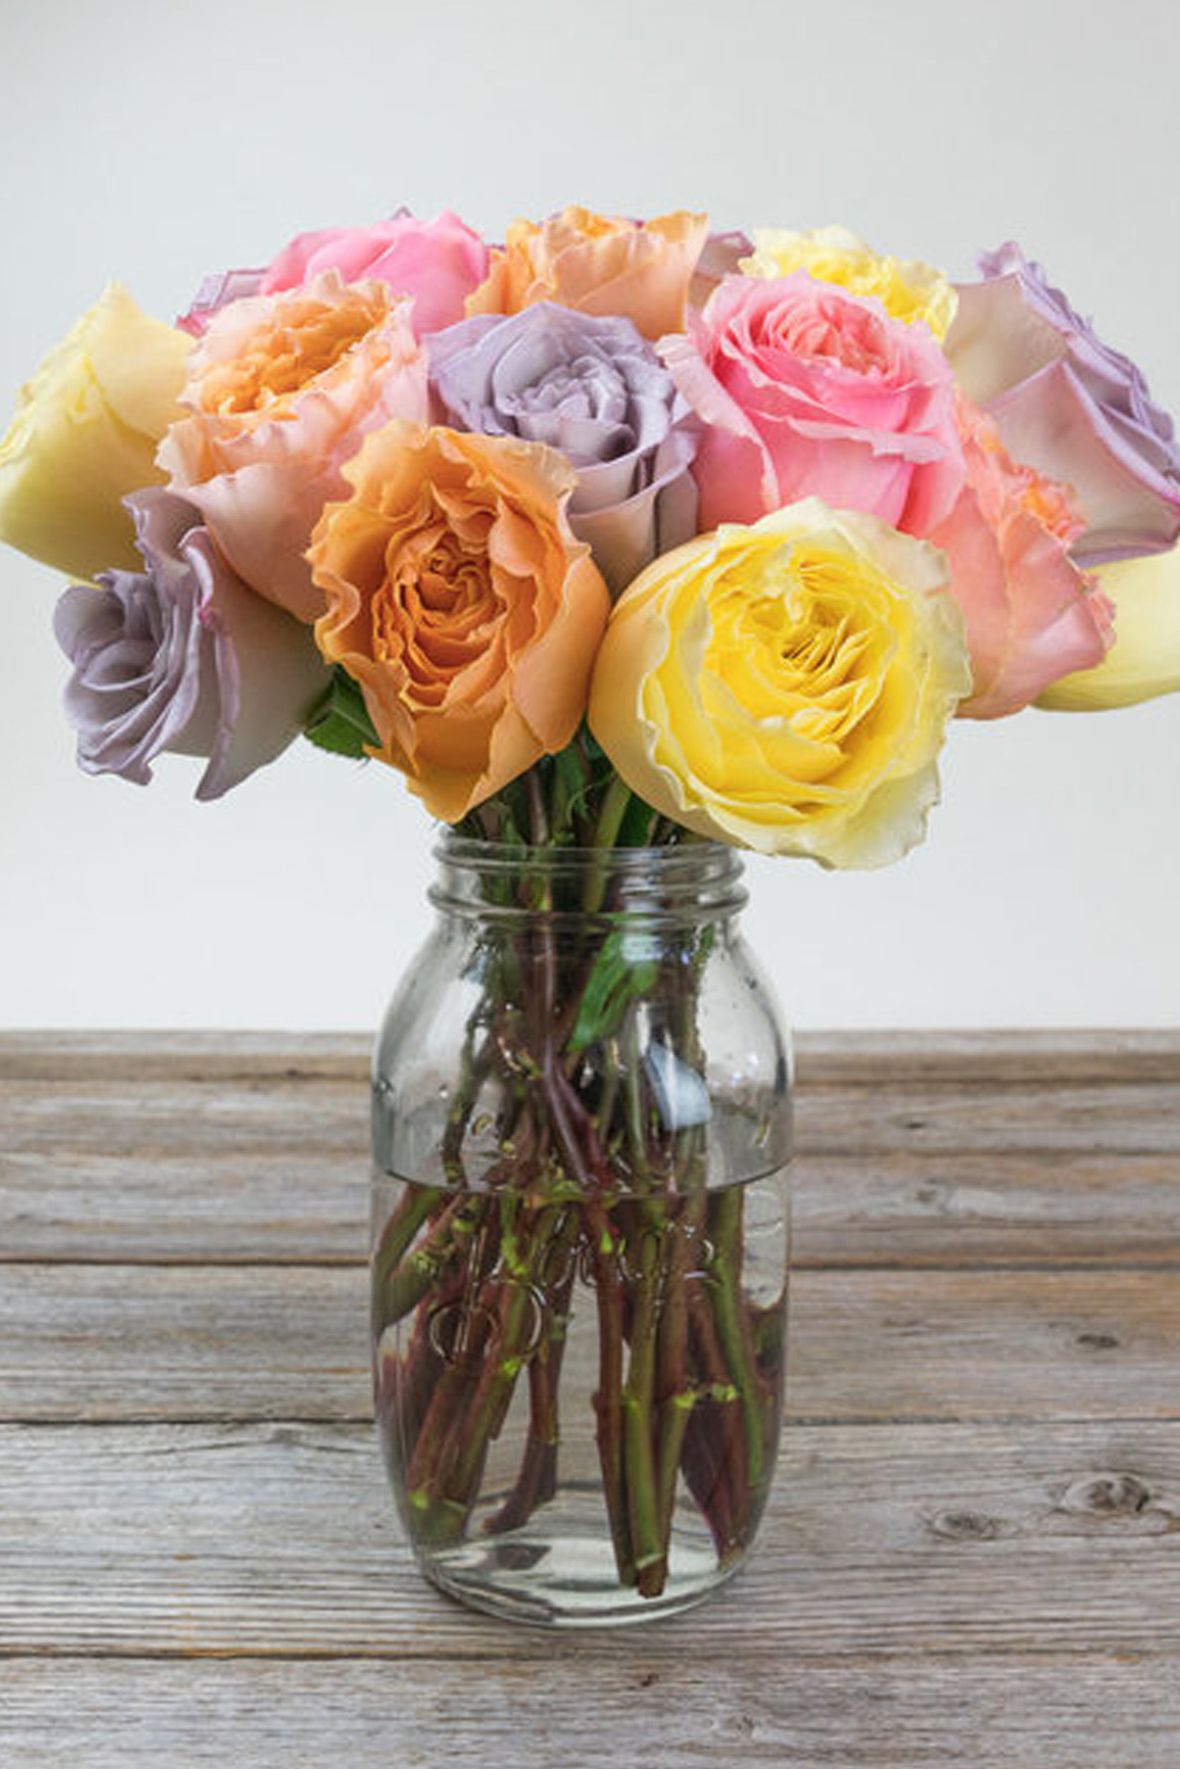 15 Pretty Easter Flower Arrangements - Best Easter Flower Centerpieces